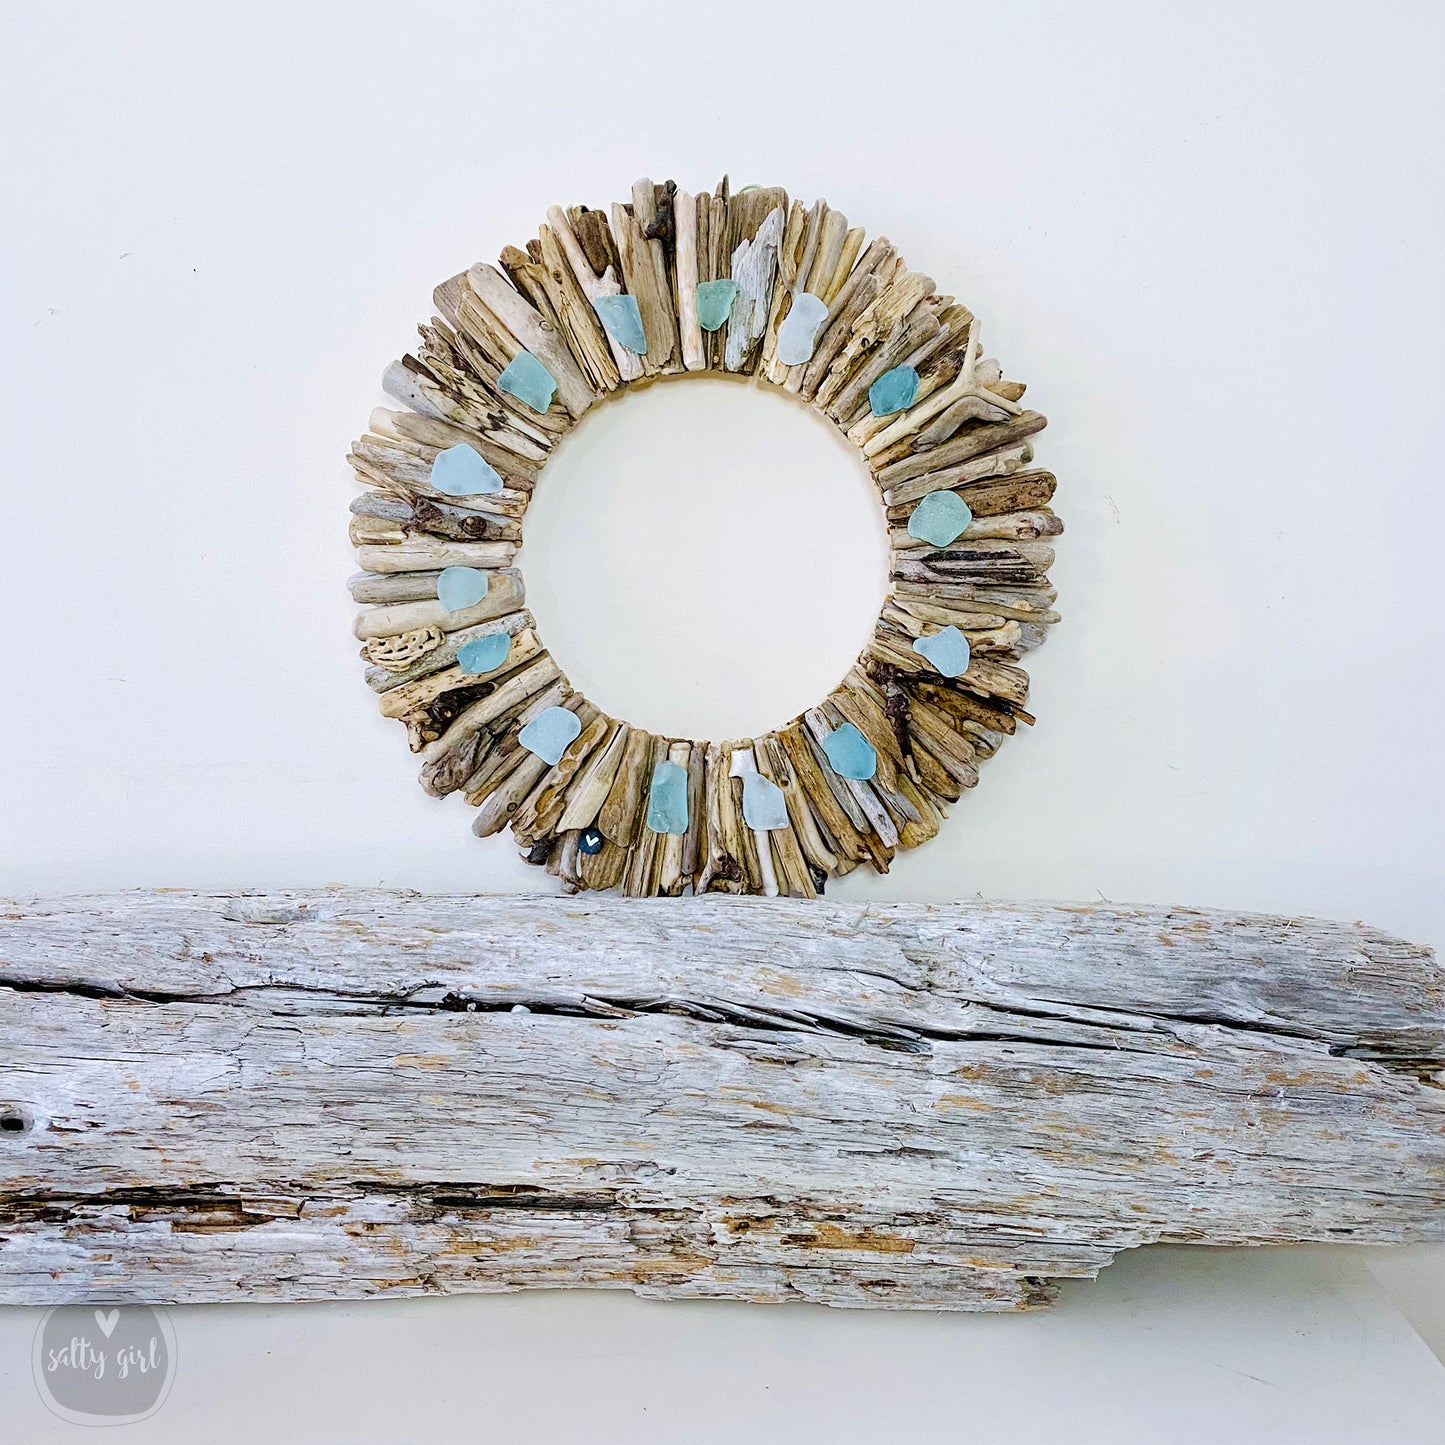 Driftwood Wreath with Shades of Aqua Sea Glass - Sizes 12" - 16" - 20”